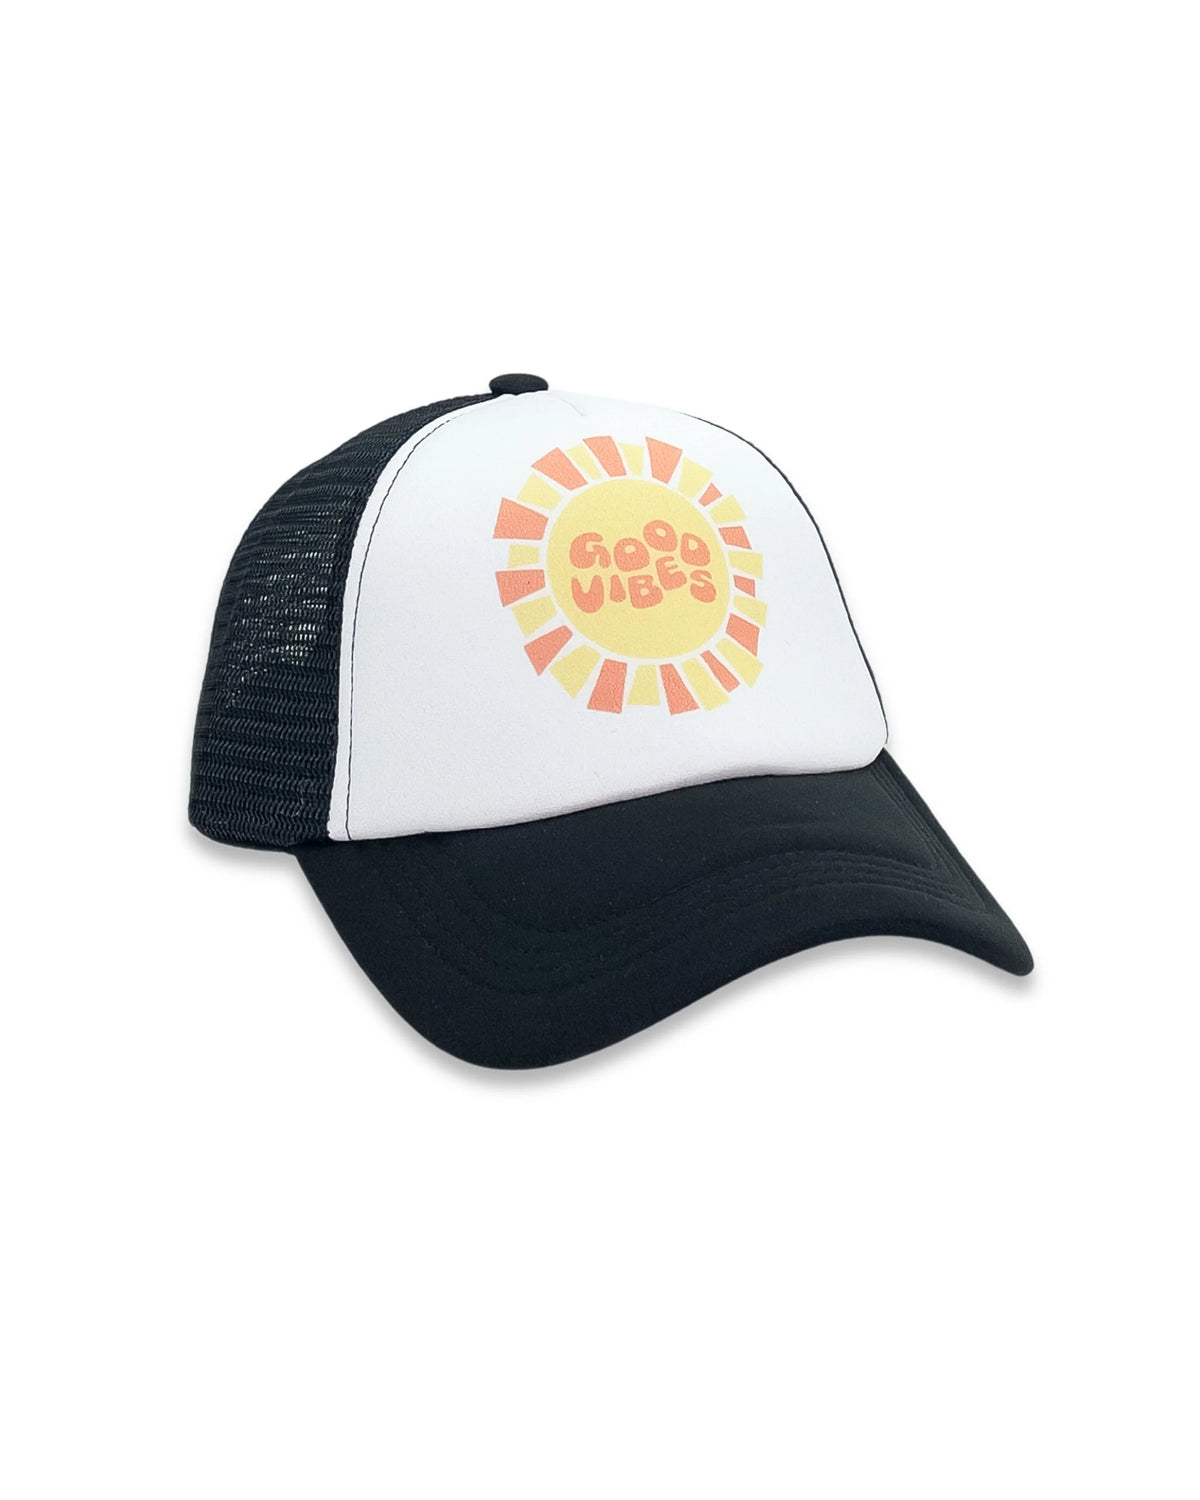 Good Vibes Trucker Hat - JoeyRae